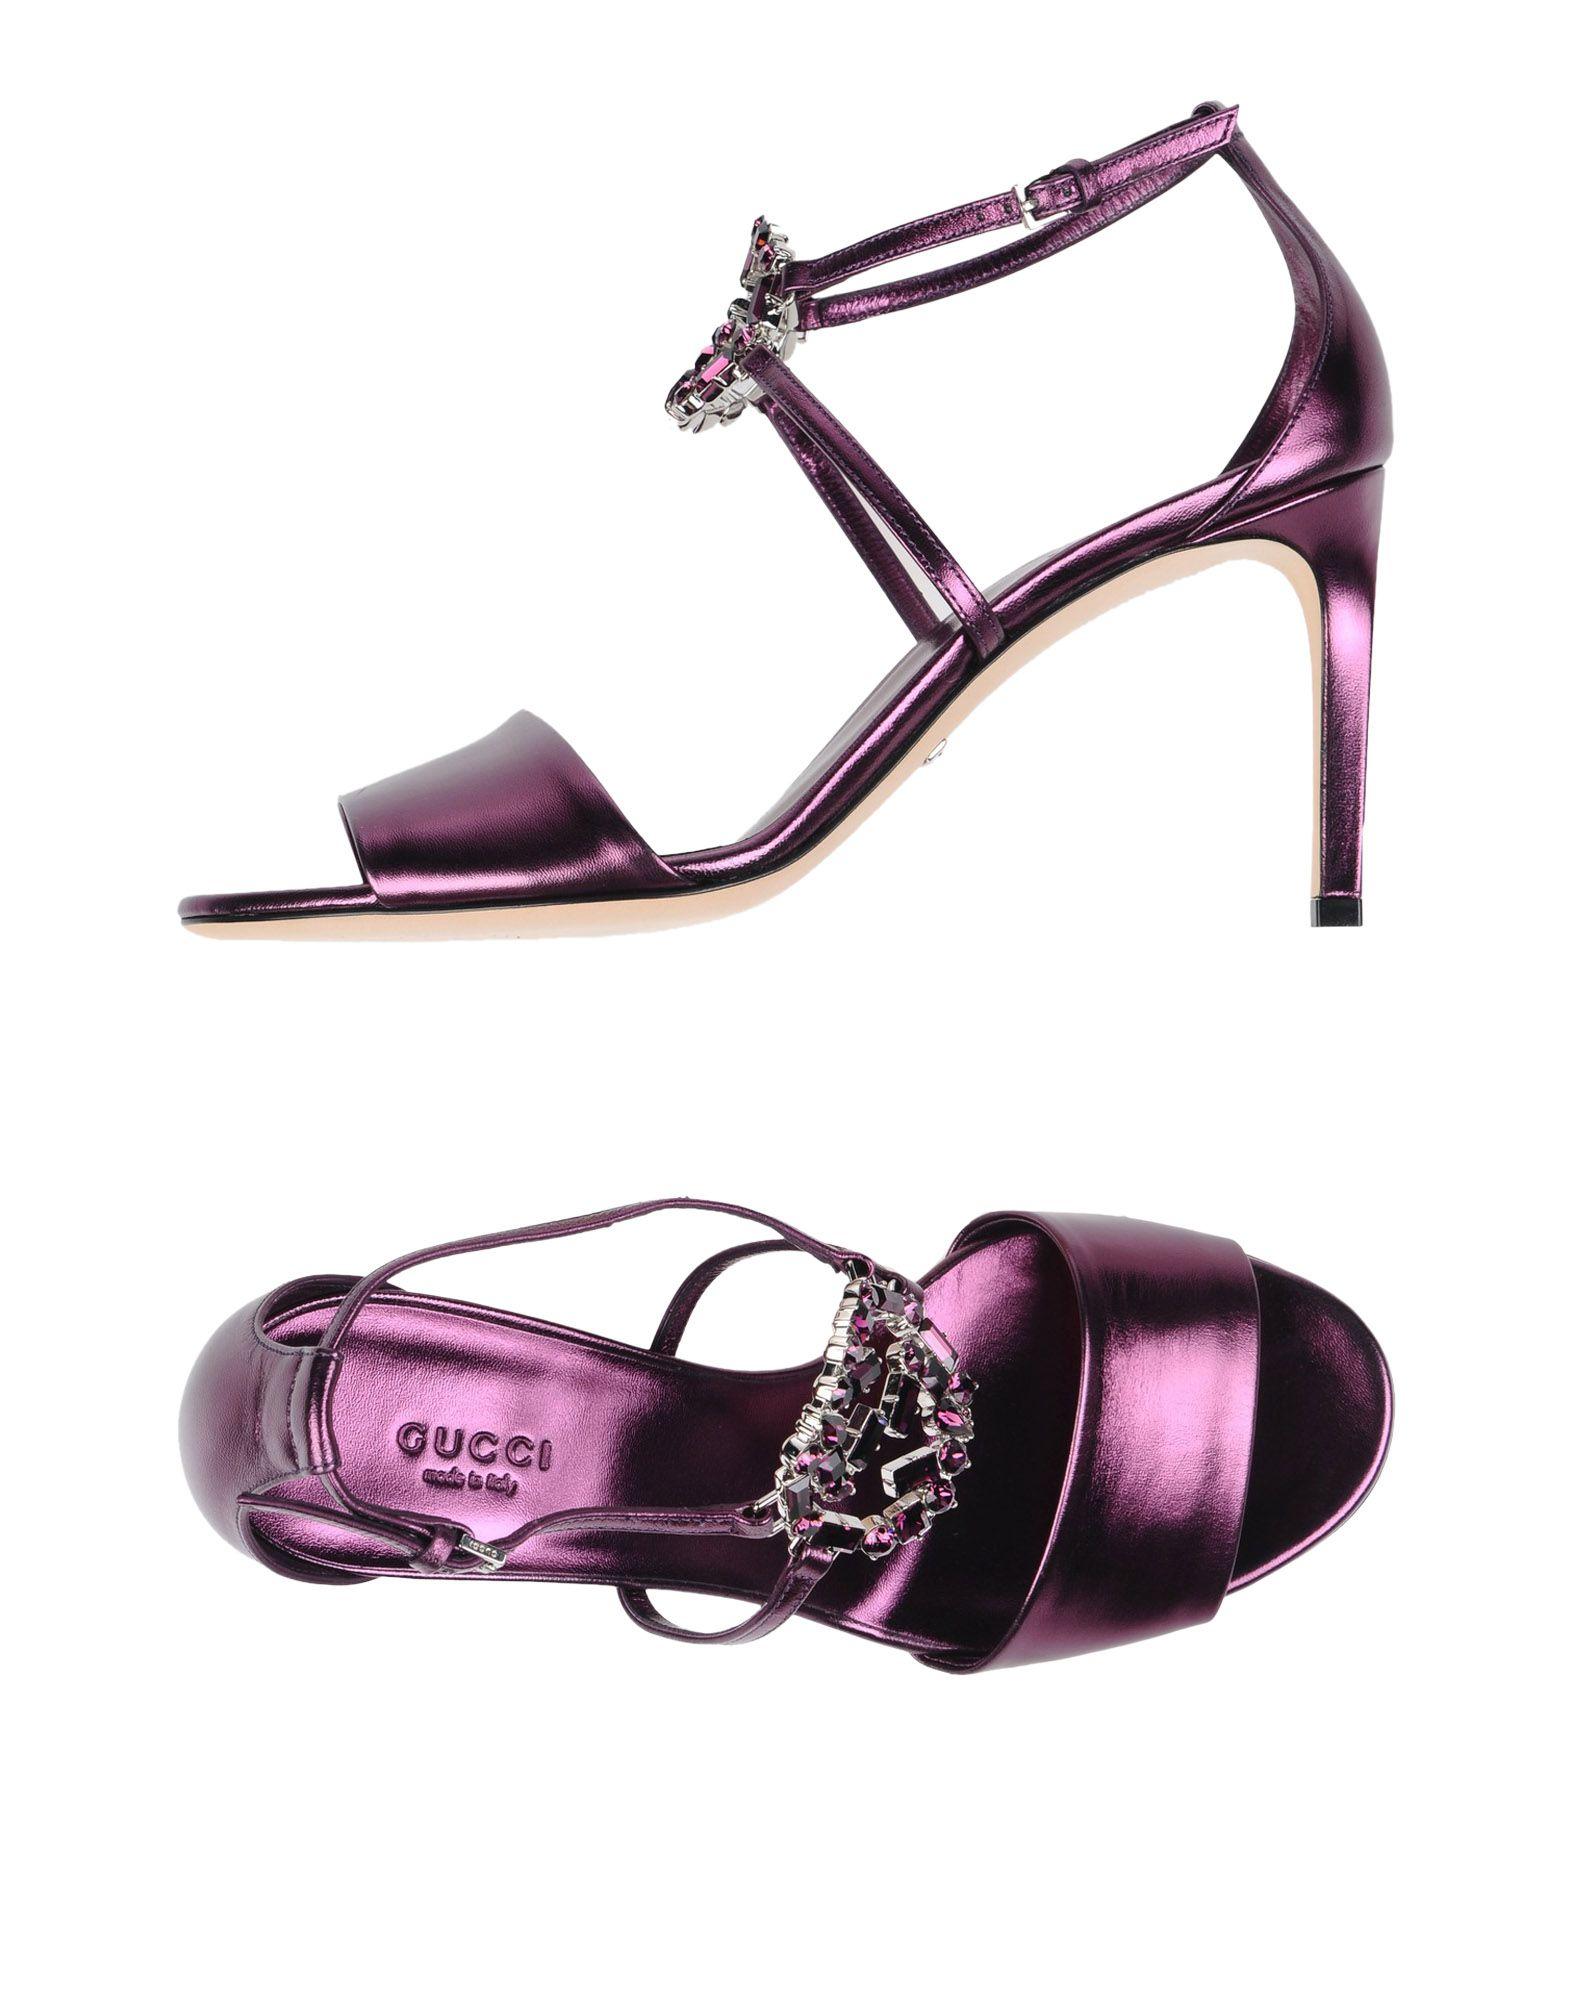 Lyst Gucci Sandals in Purple